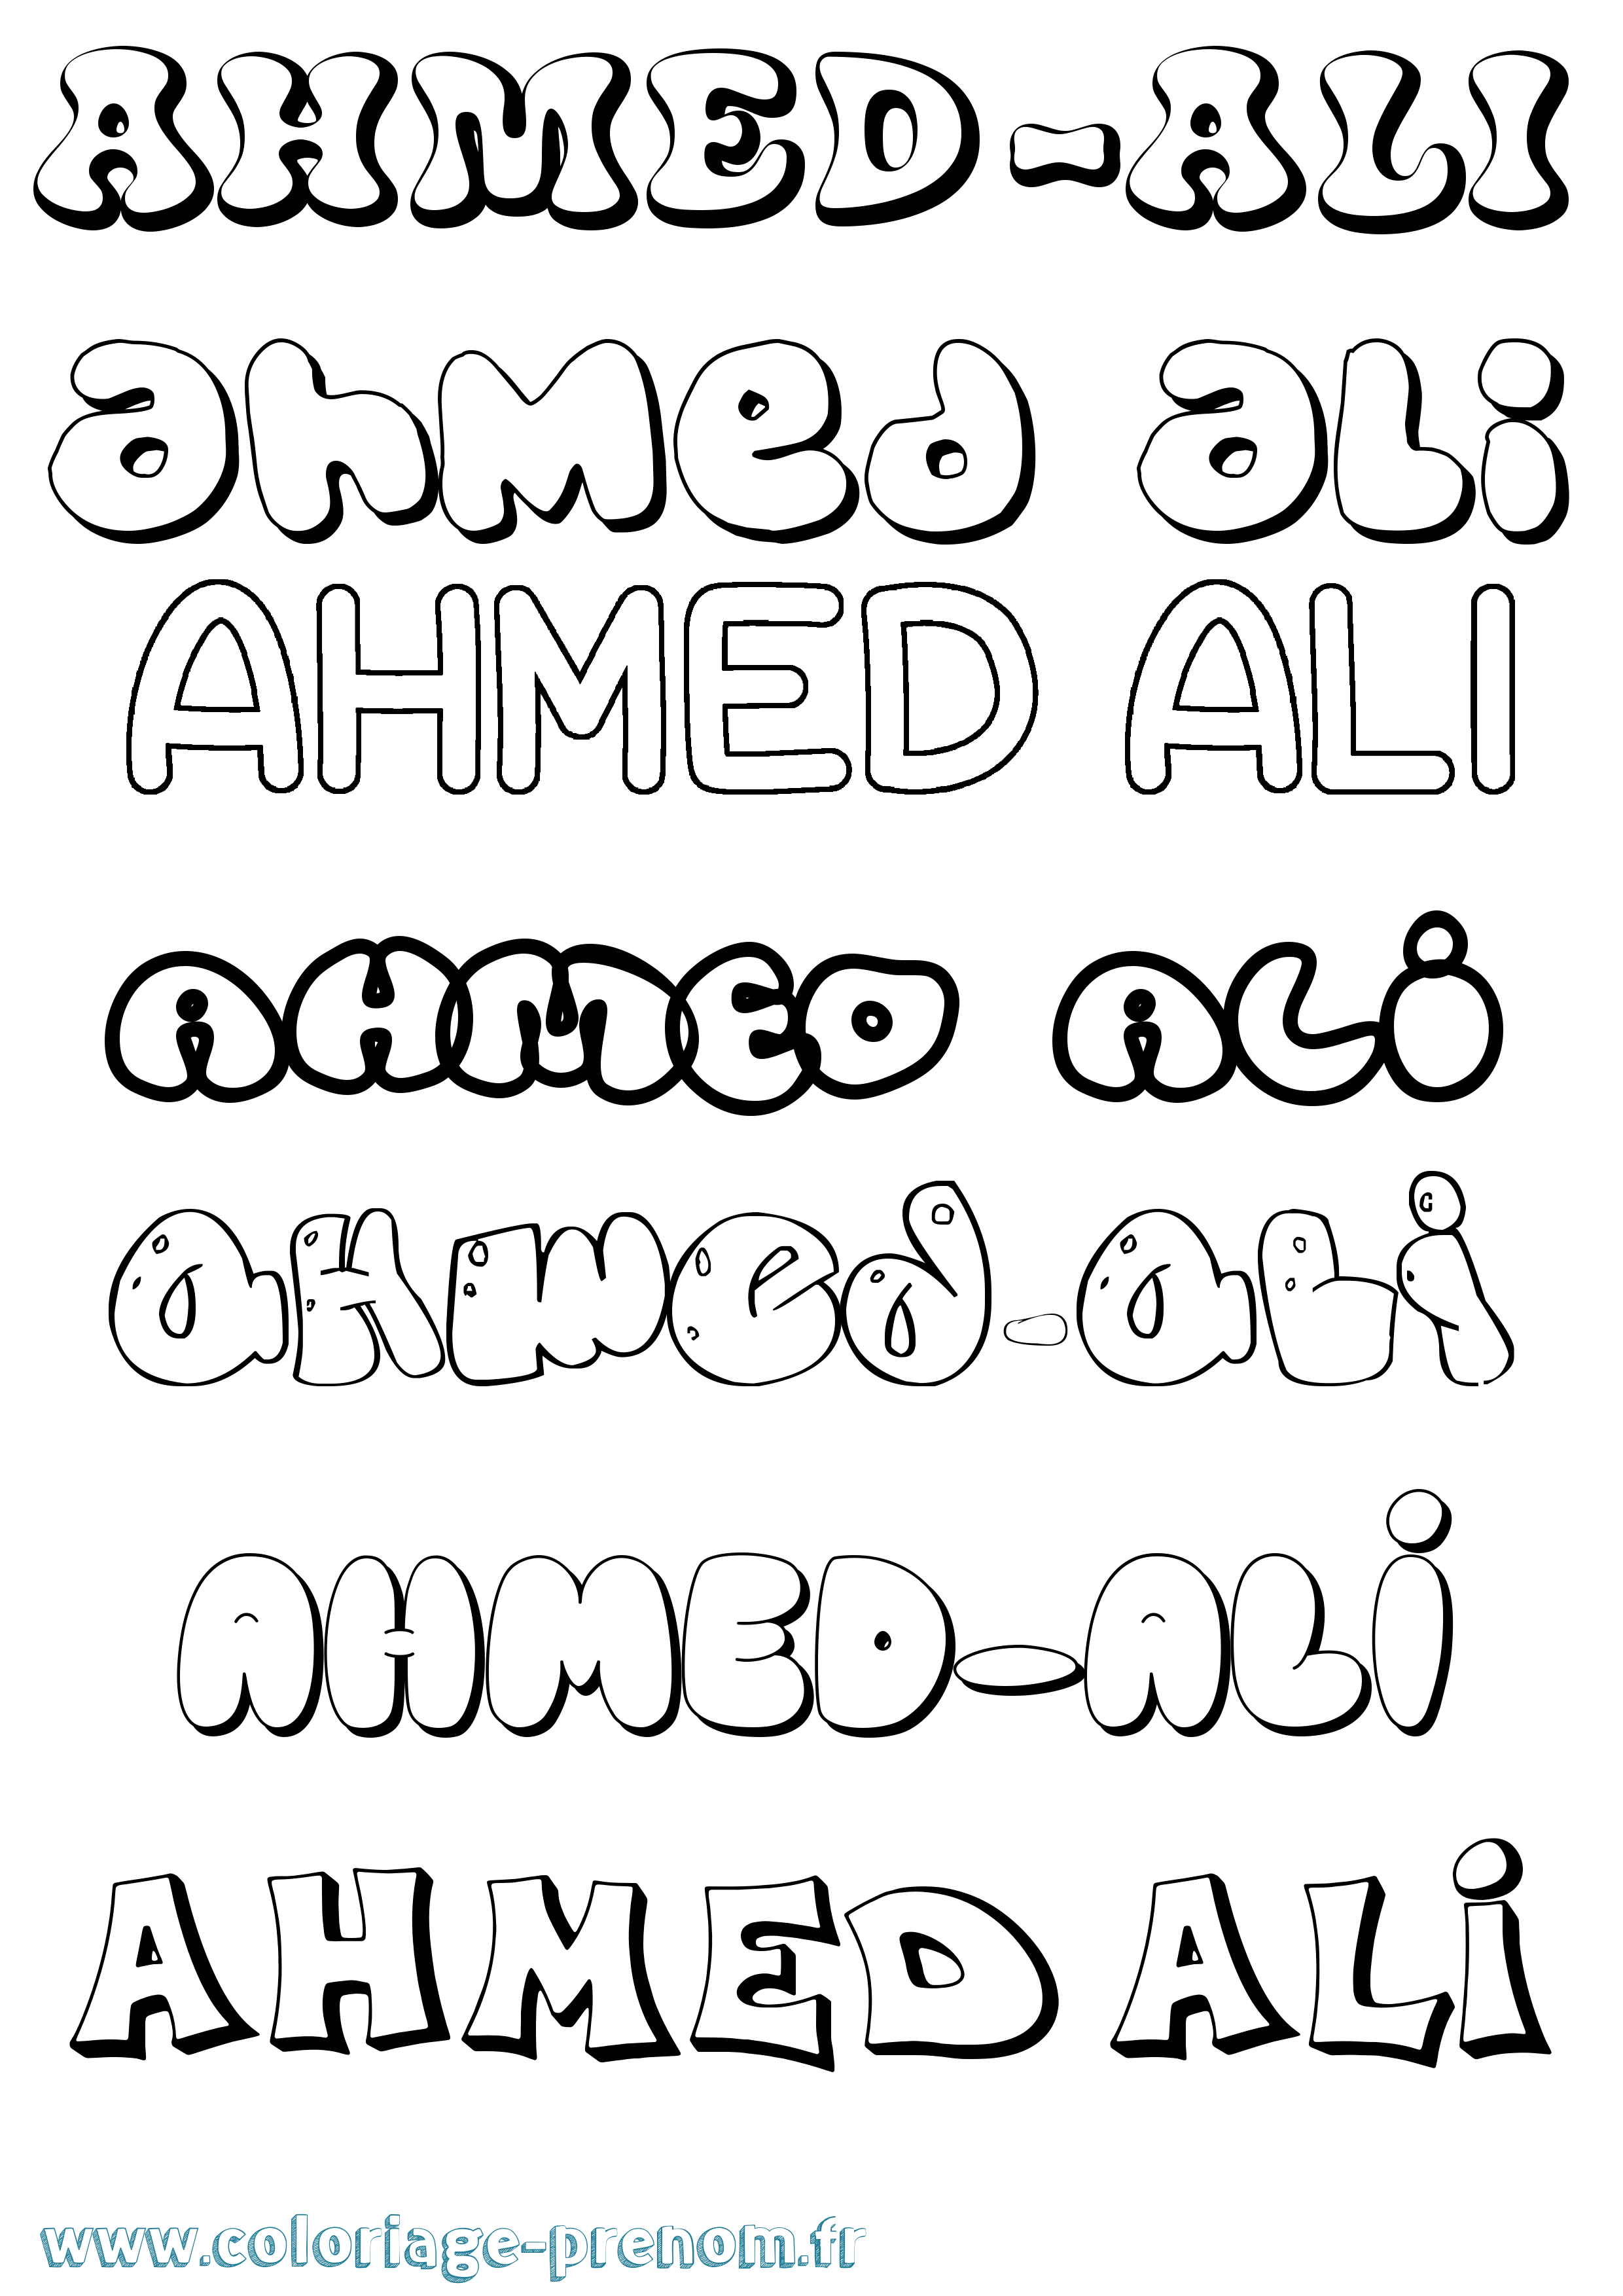 Coloriage prénom Ahmed-Ali Bubble